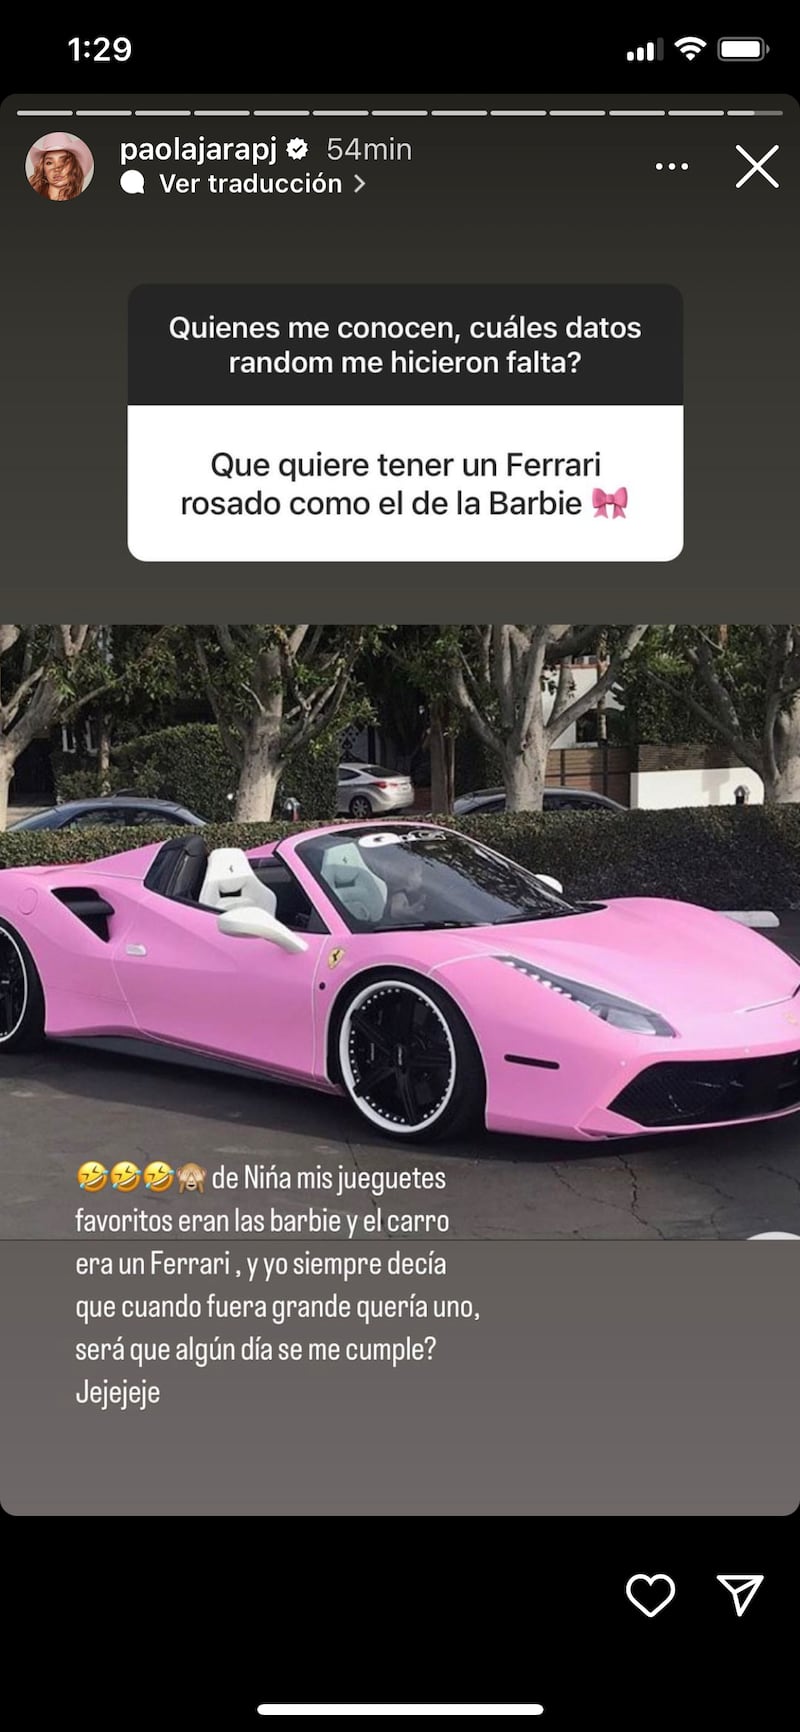 Paola Jara mostró que su sueño es tener un Ferrari color rosa